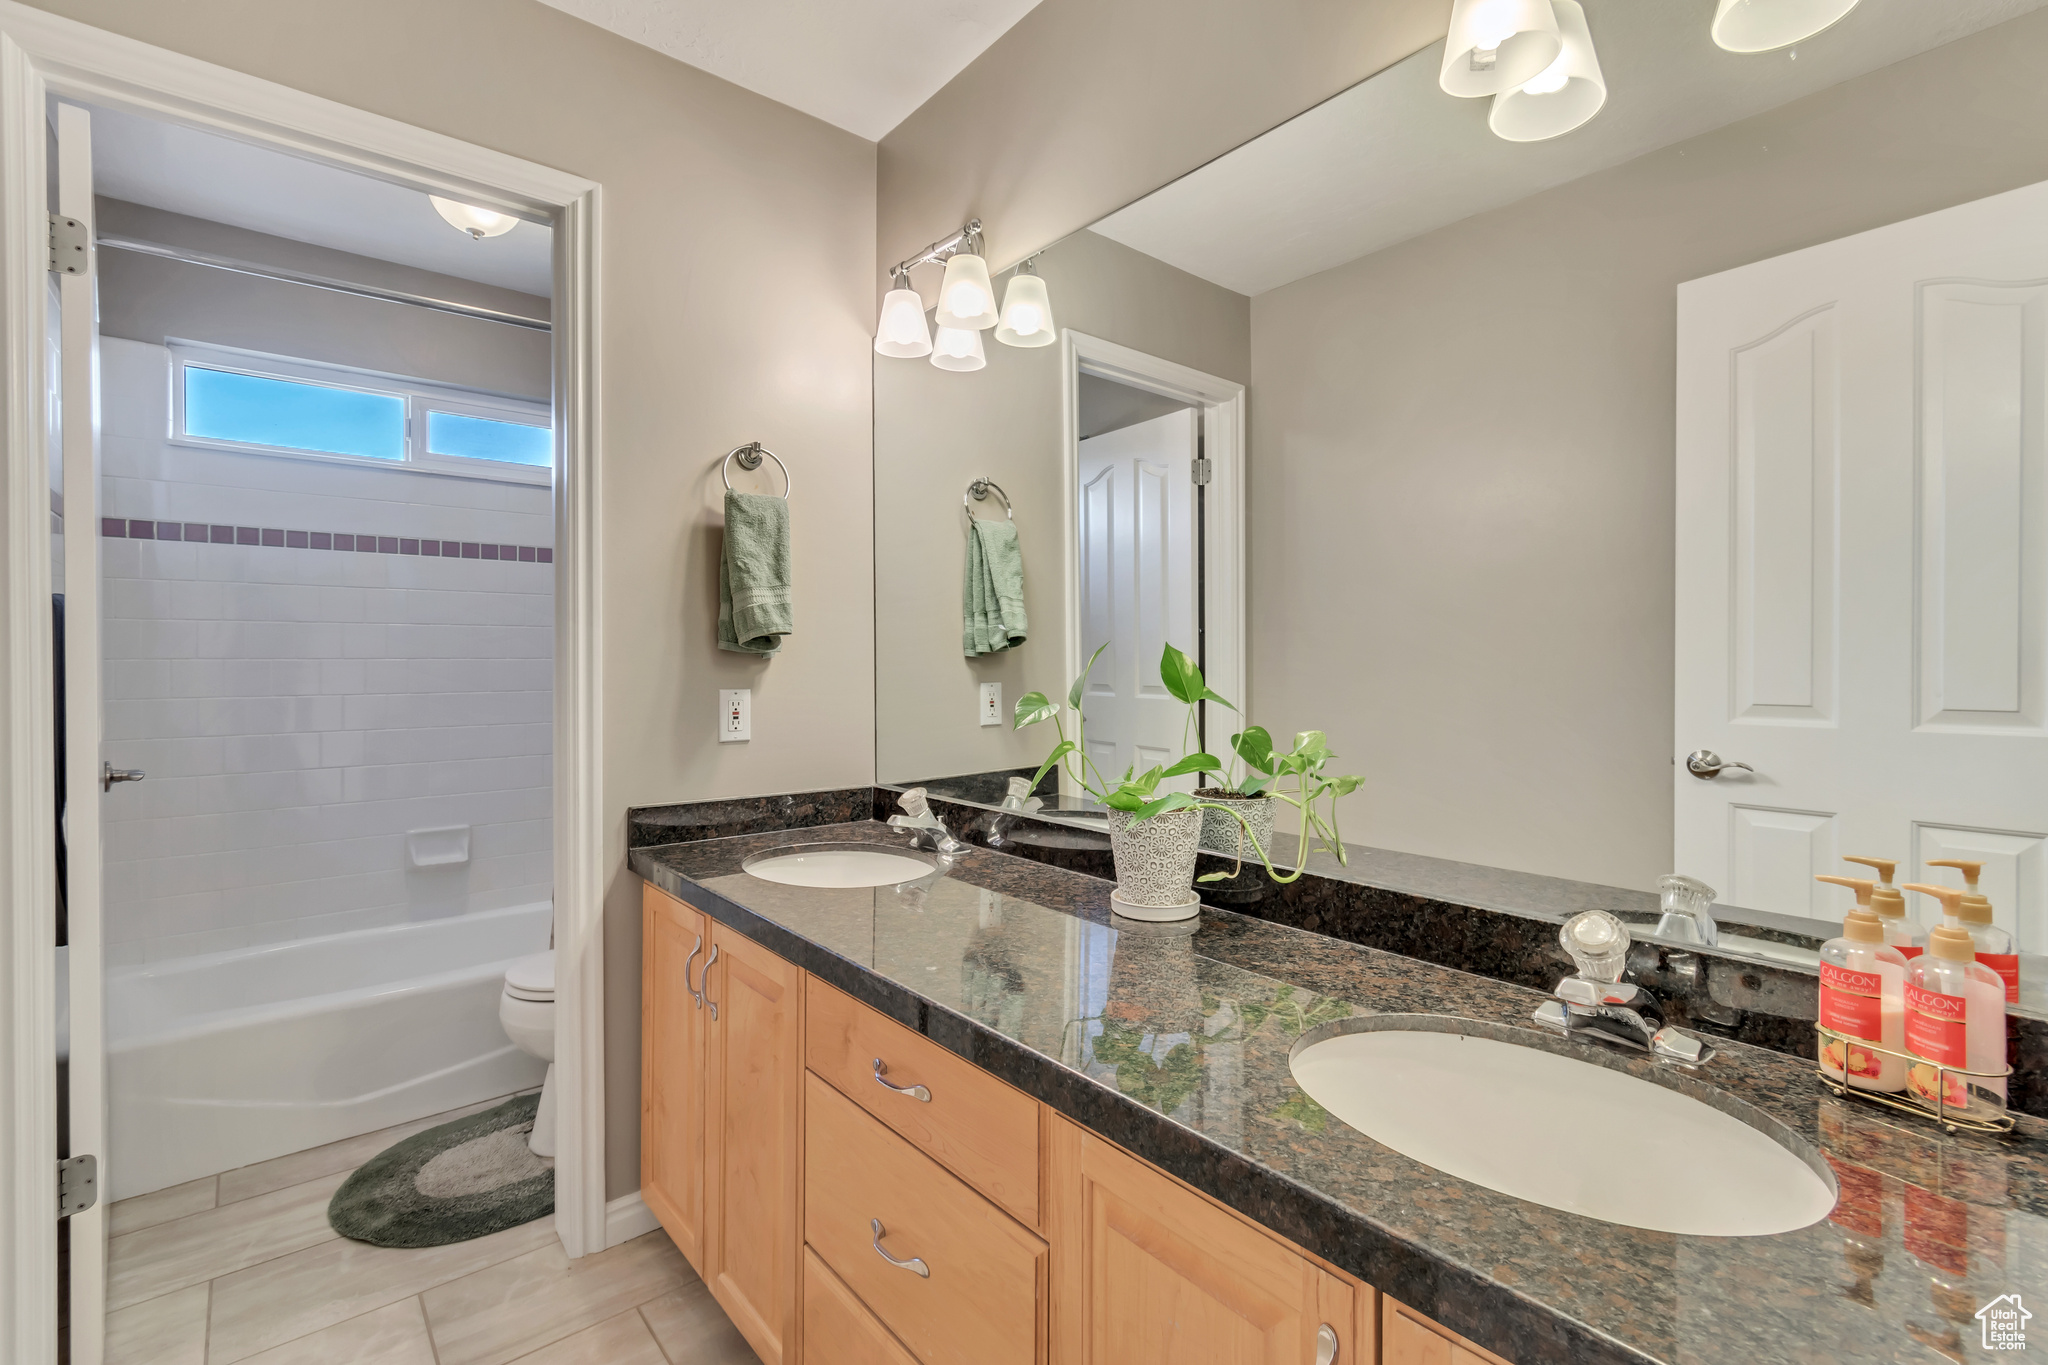 Full bathroom featuring double vanity, tiled shower / bath, toilet, and tile floors